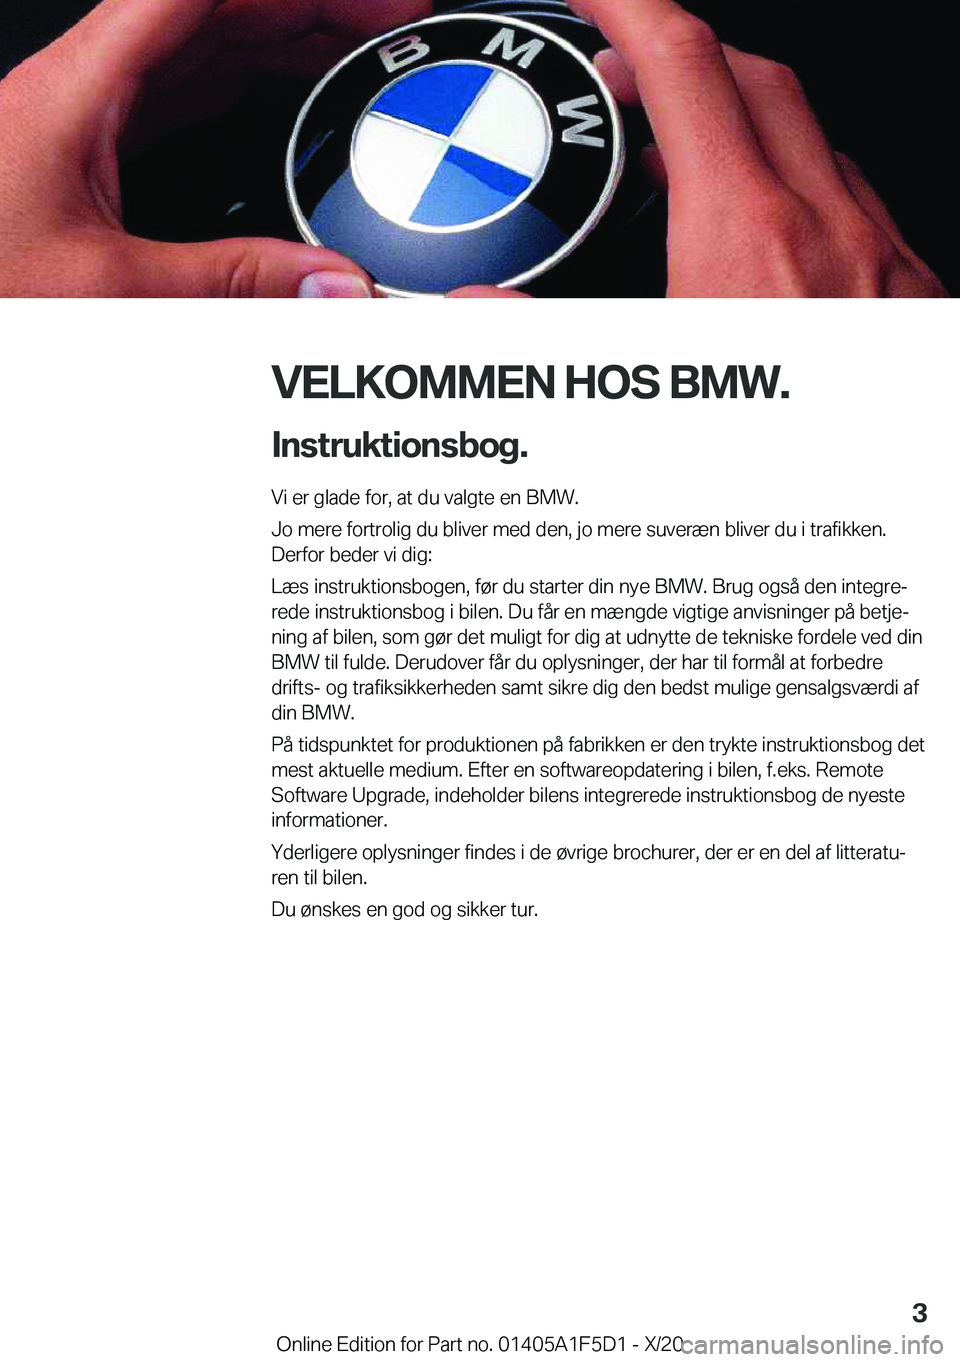 BMW X4 M 2021  InstruktionsbØger (in Danish) �V�E�L�K�O�M�M�E�N��H�O�S��B�M�W�.
�I�n�s�t�r�u�k�t�i�o�n�s�b�o�g�. �V�i��e�r��g�l�a�d�e��f�o�r�,��a�t��d�u��v�a�l�g�t�e��e�n��B�M�W�.
�J�o��m�e�r�e��f�o�r�t�r�o�l�i�g��d�u��b�l�i�v�e�r�